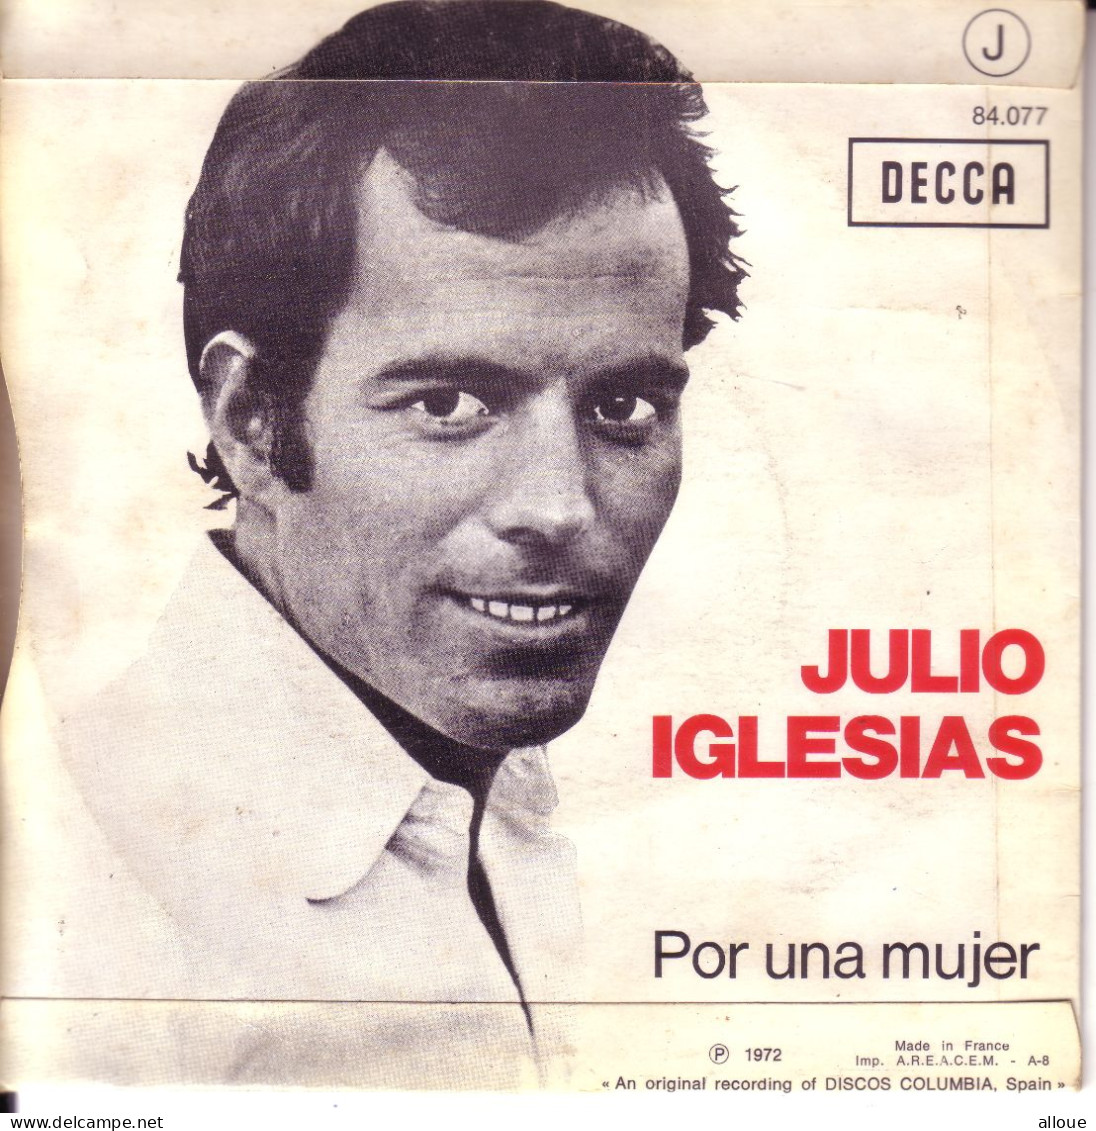 JULIO IGLESIAS - FR SP - UN CANTO A GALICIA + POR UNA MUJER - Other - Spanish Music